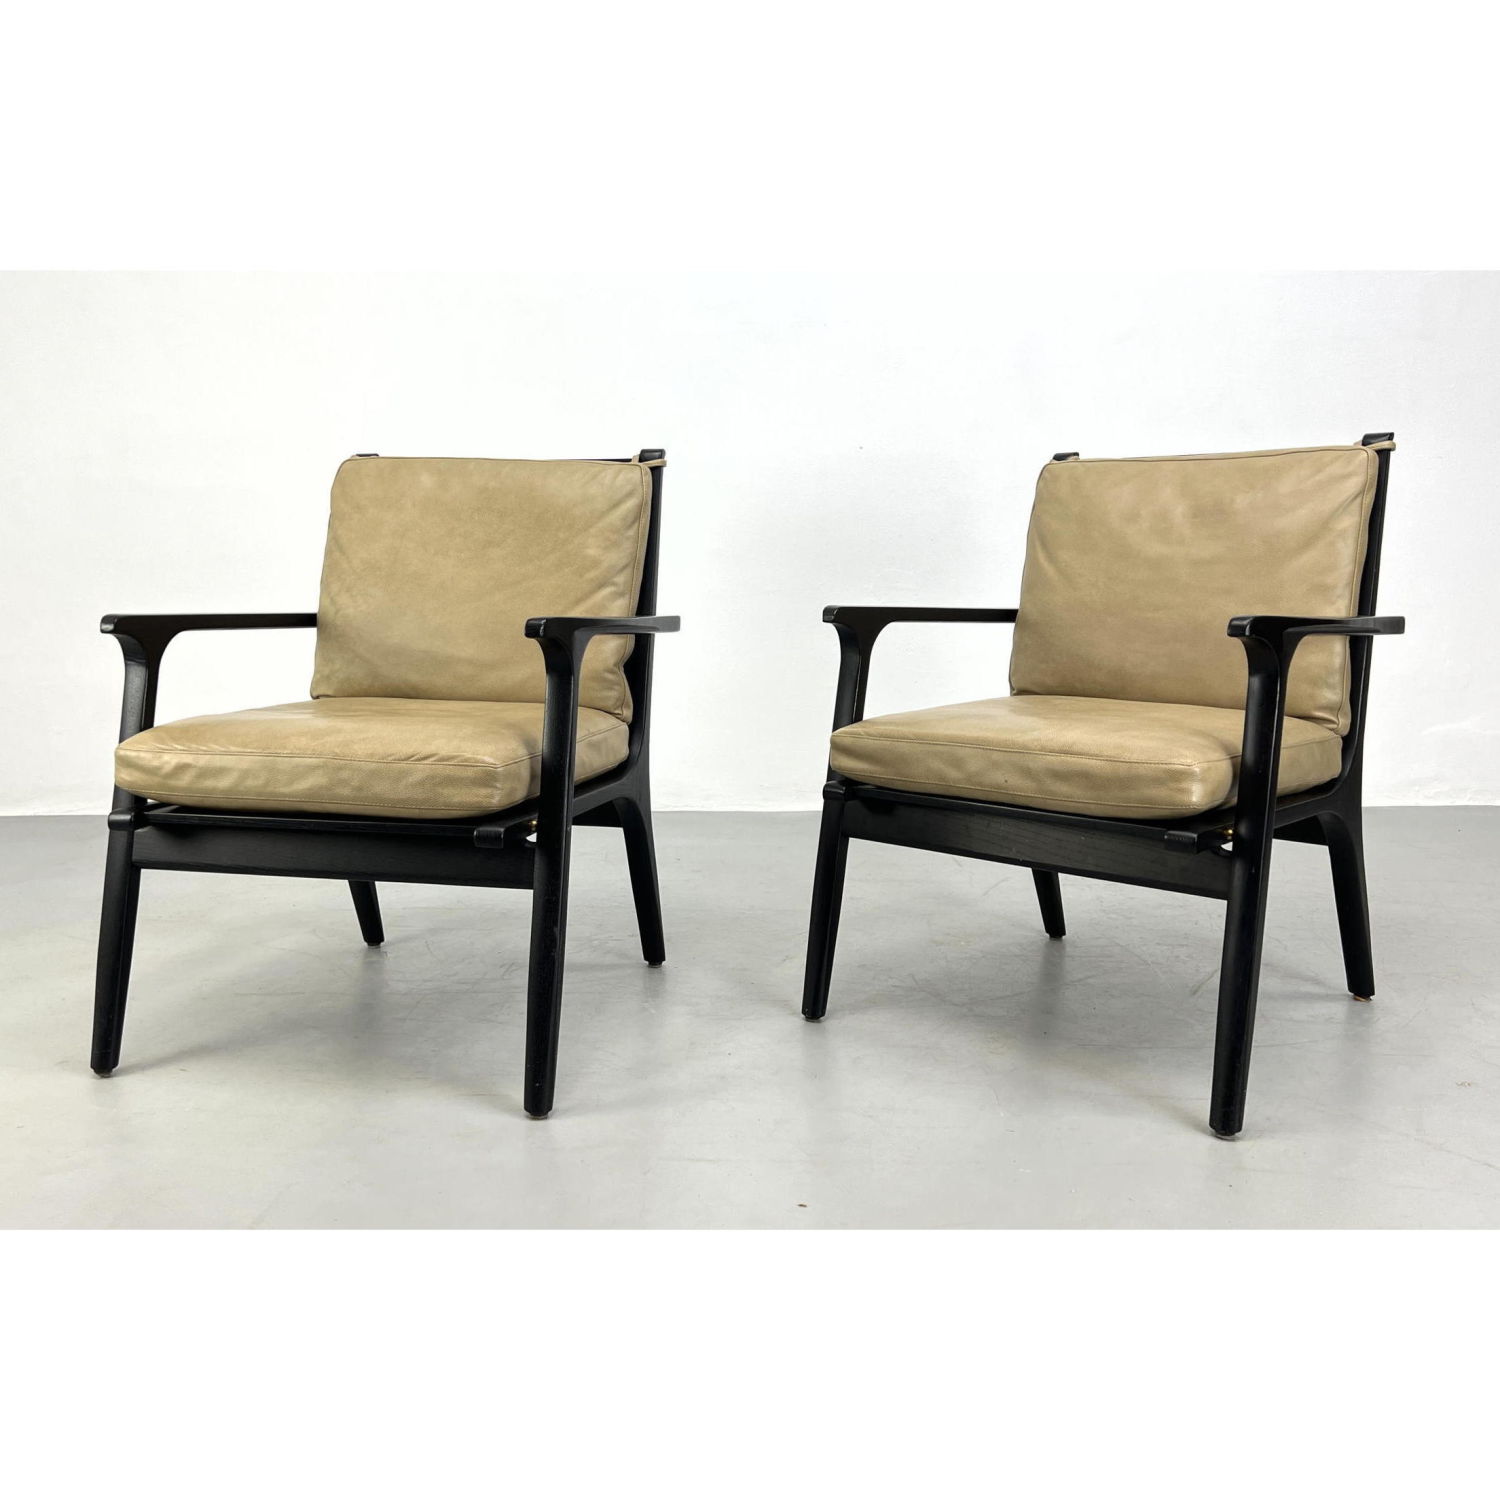 Pair Ren Lounge Chairs. designed